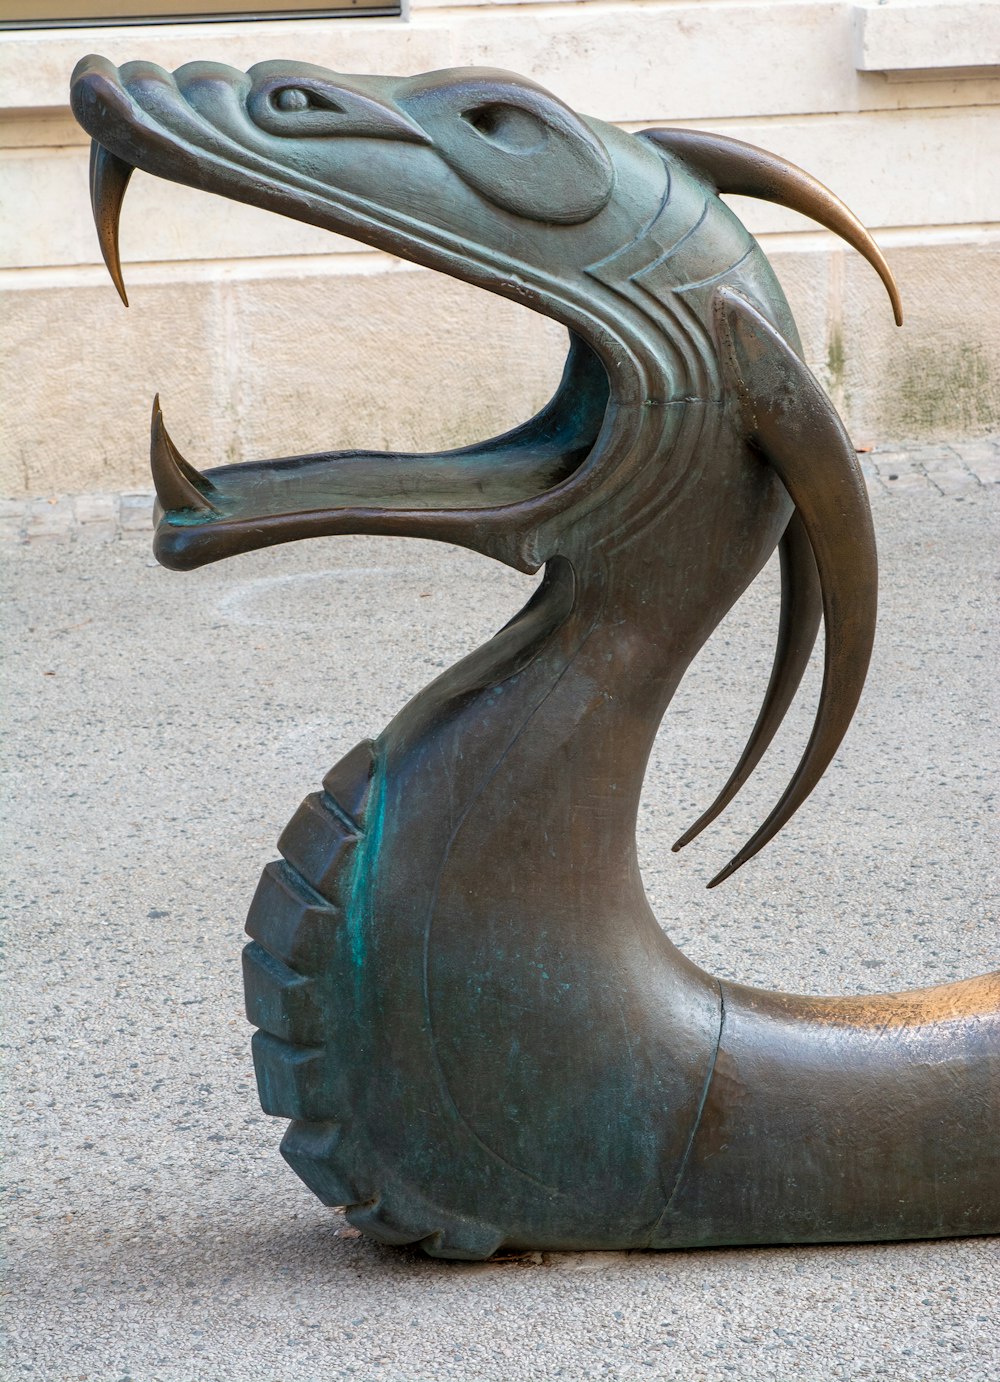 a bronze statue of a dragon on a sidewalk